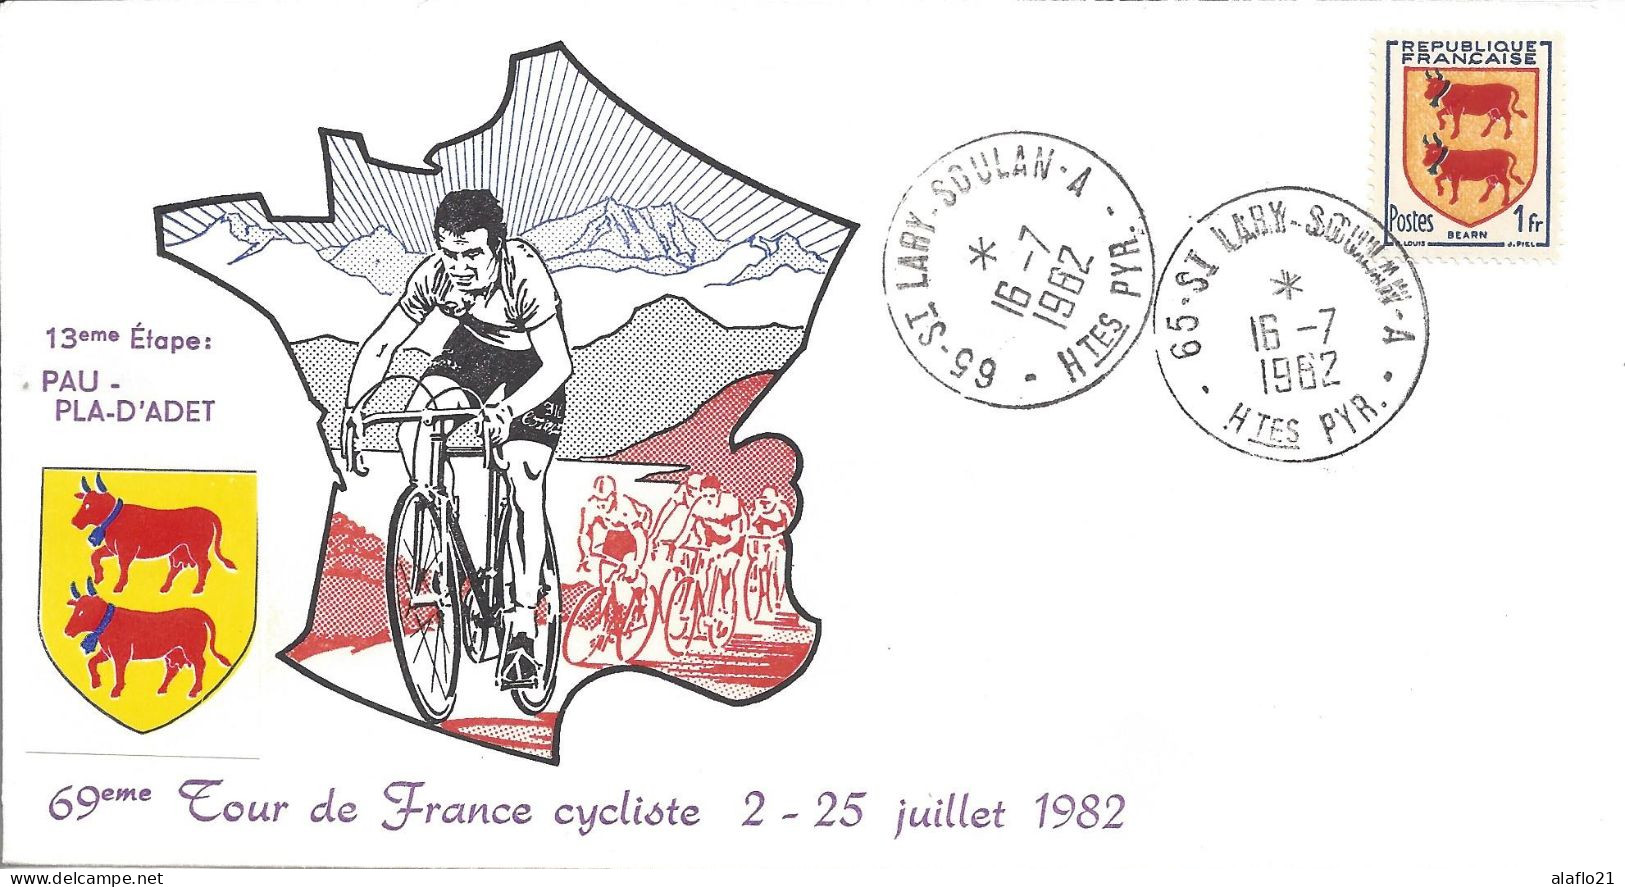 ENVELOPPE OFFICIELLE TOUR De FRANCE CYCLISTE 1982 - 13e ETAPE - PAU PLAT D'ADET - Matasellos Conmemorativos